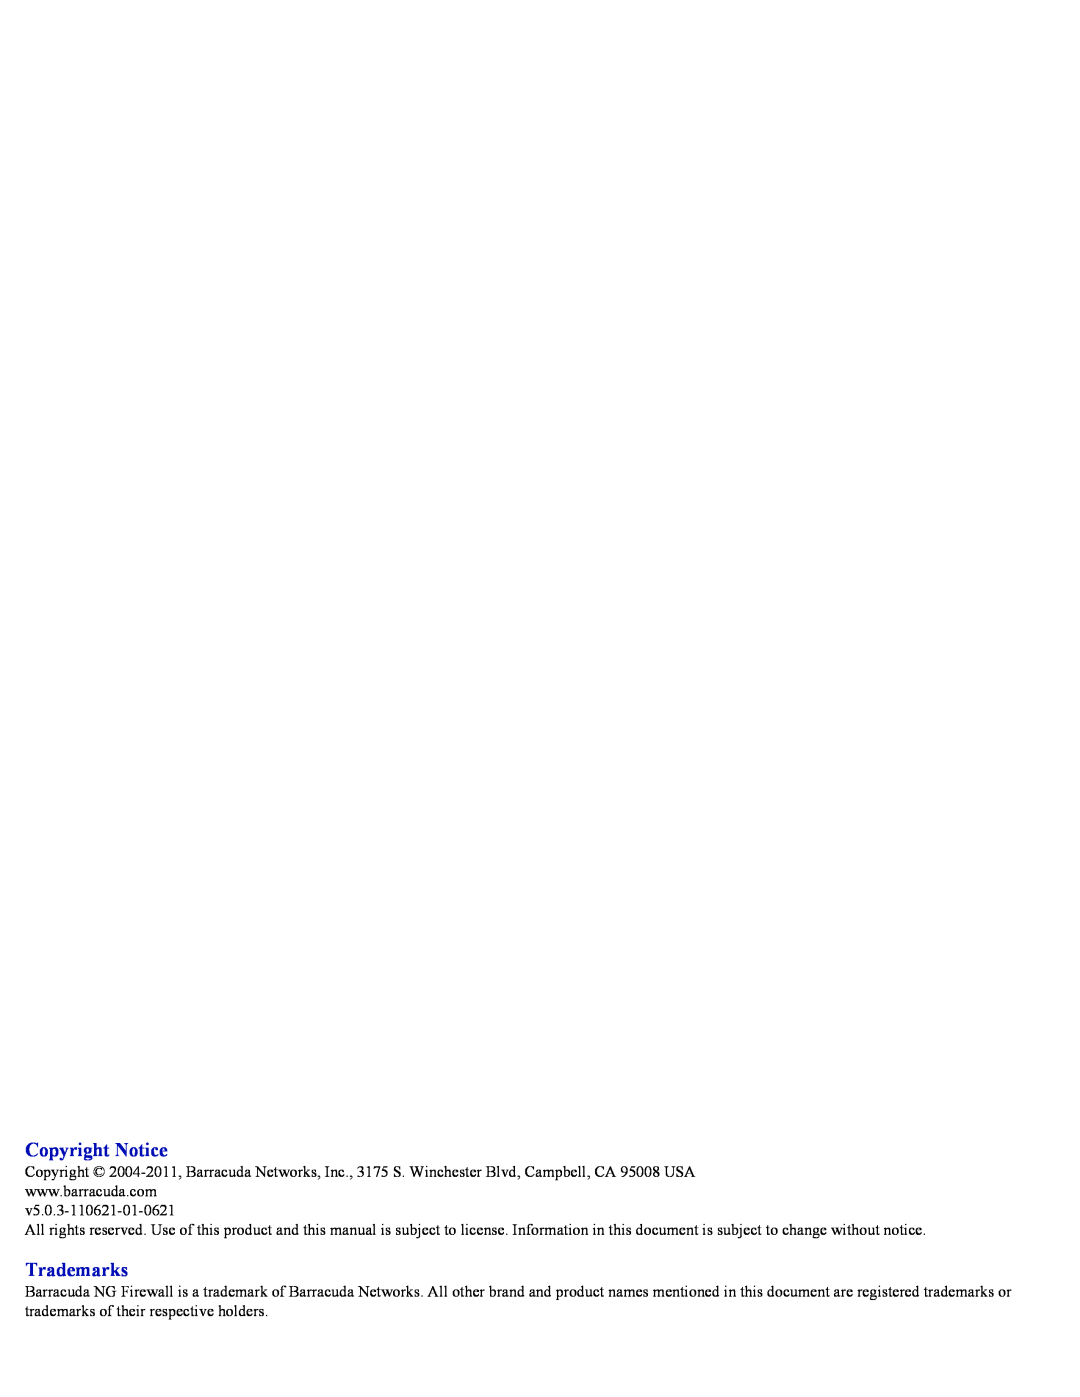 Barracuda Networks 5.0.3 manual Copyright Notice, Trademarks 